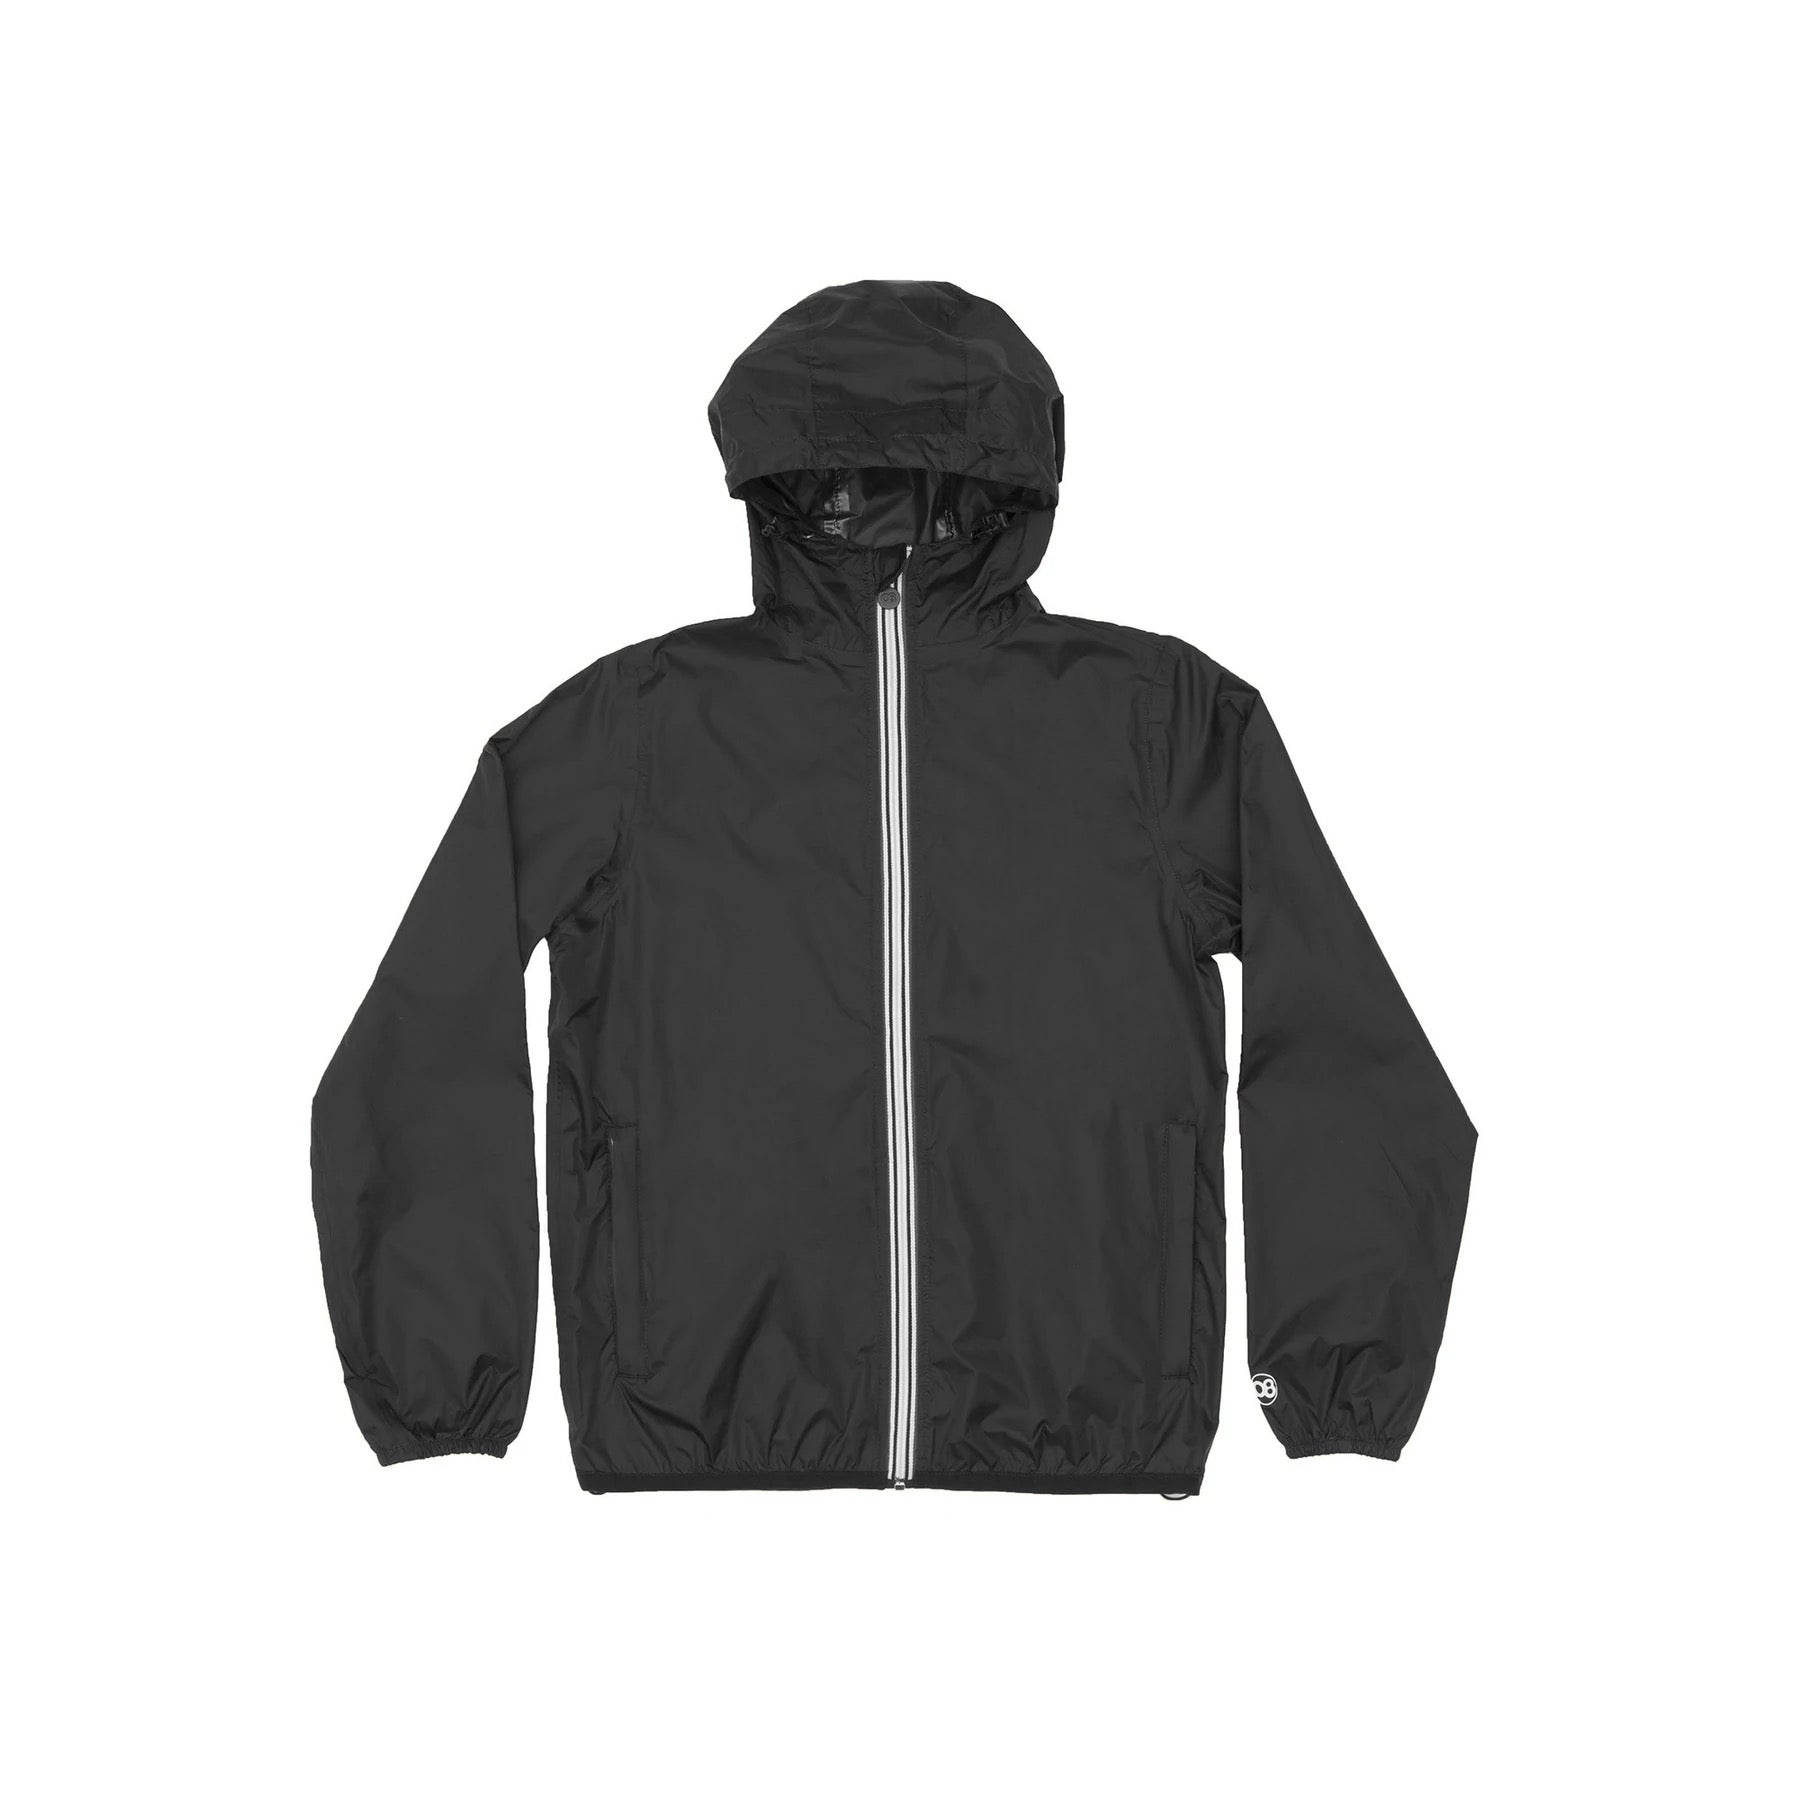 Black full zip packable rain jacket and windbreaker - O8Lifestyle